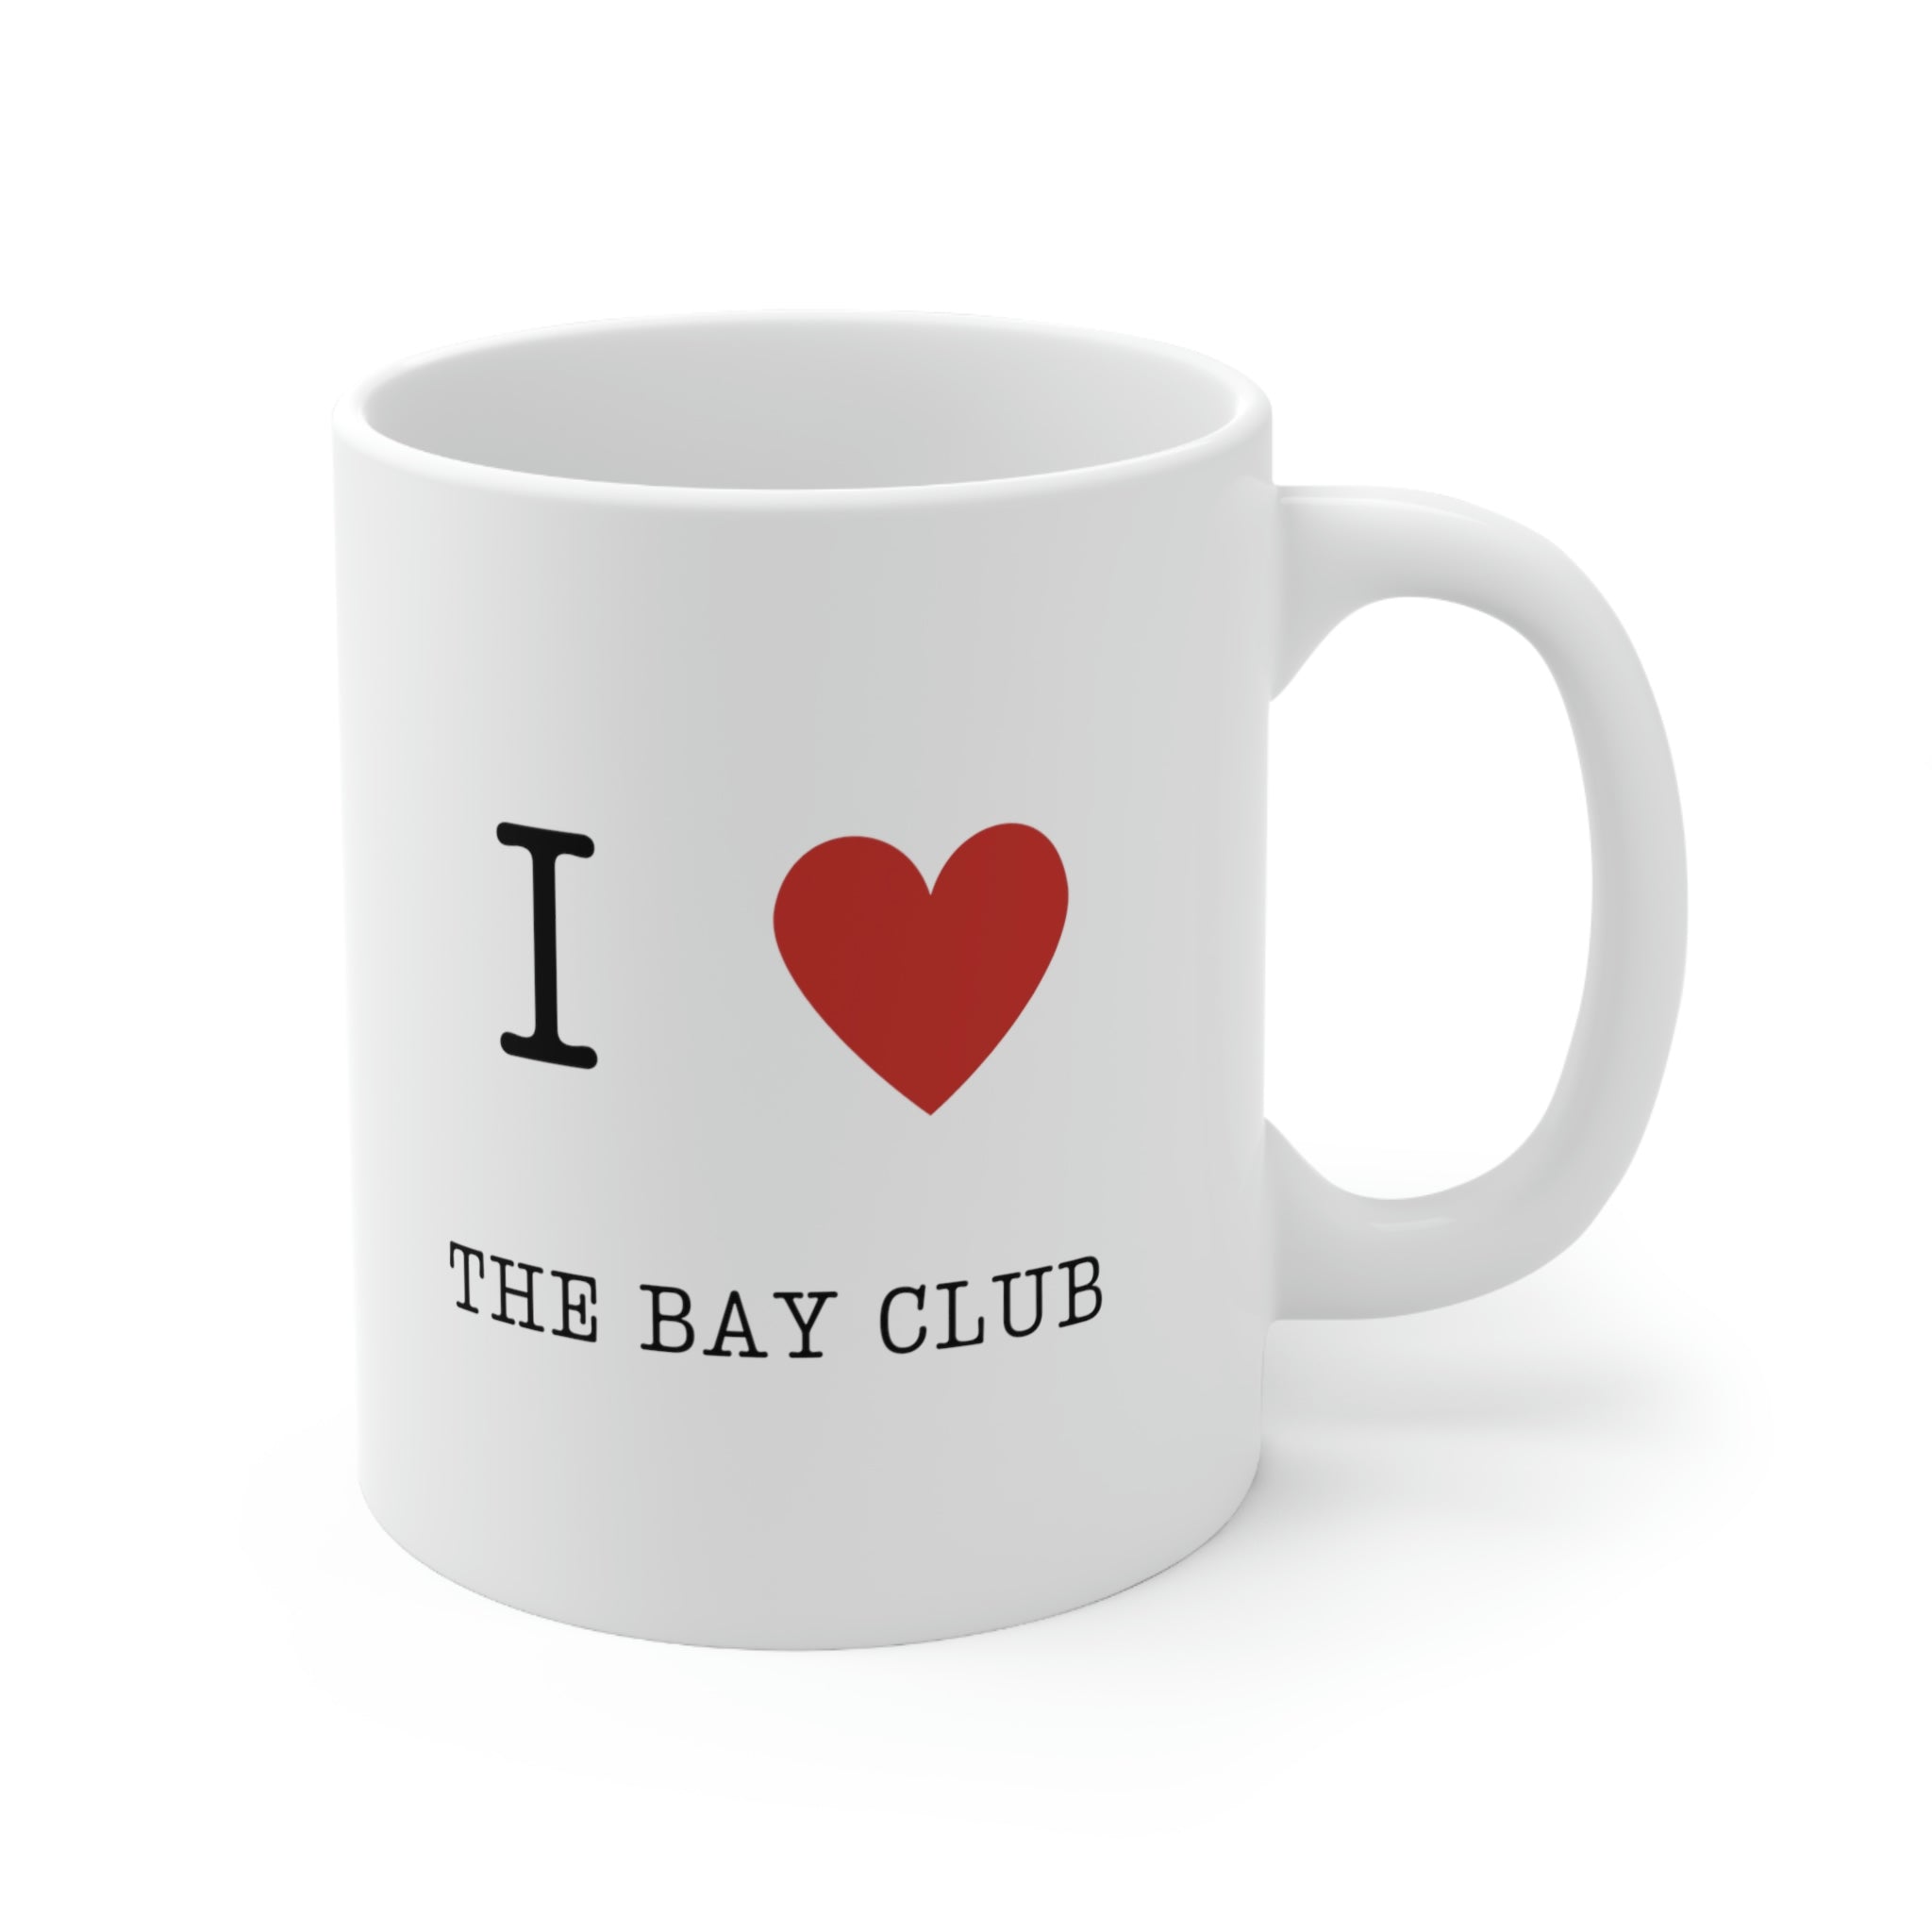 Love Your Club Mug 11oz - The Bay Club